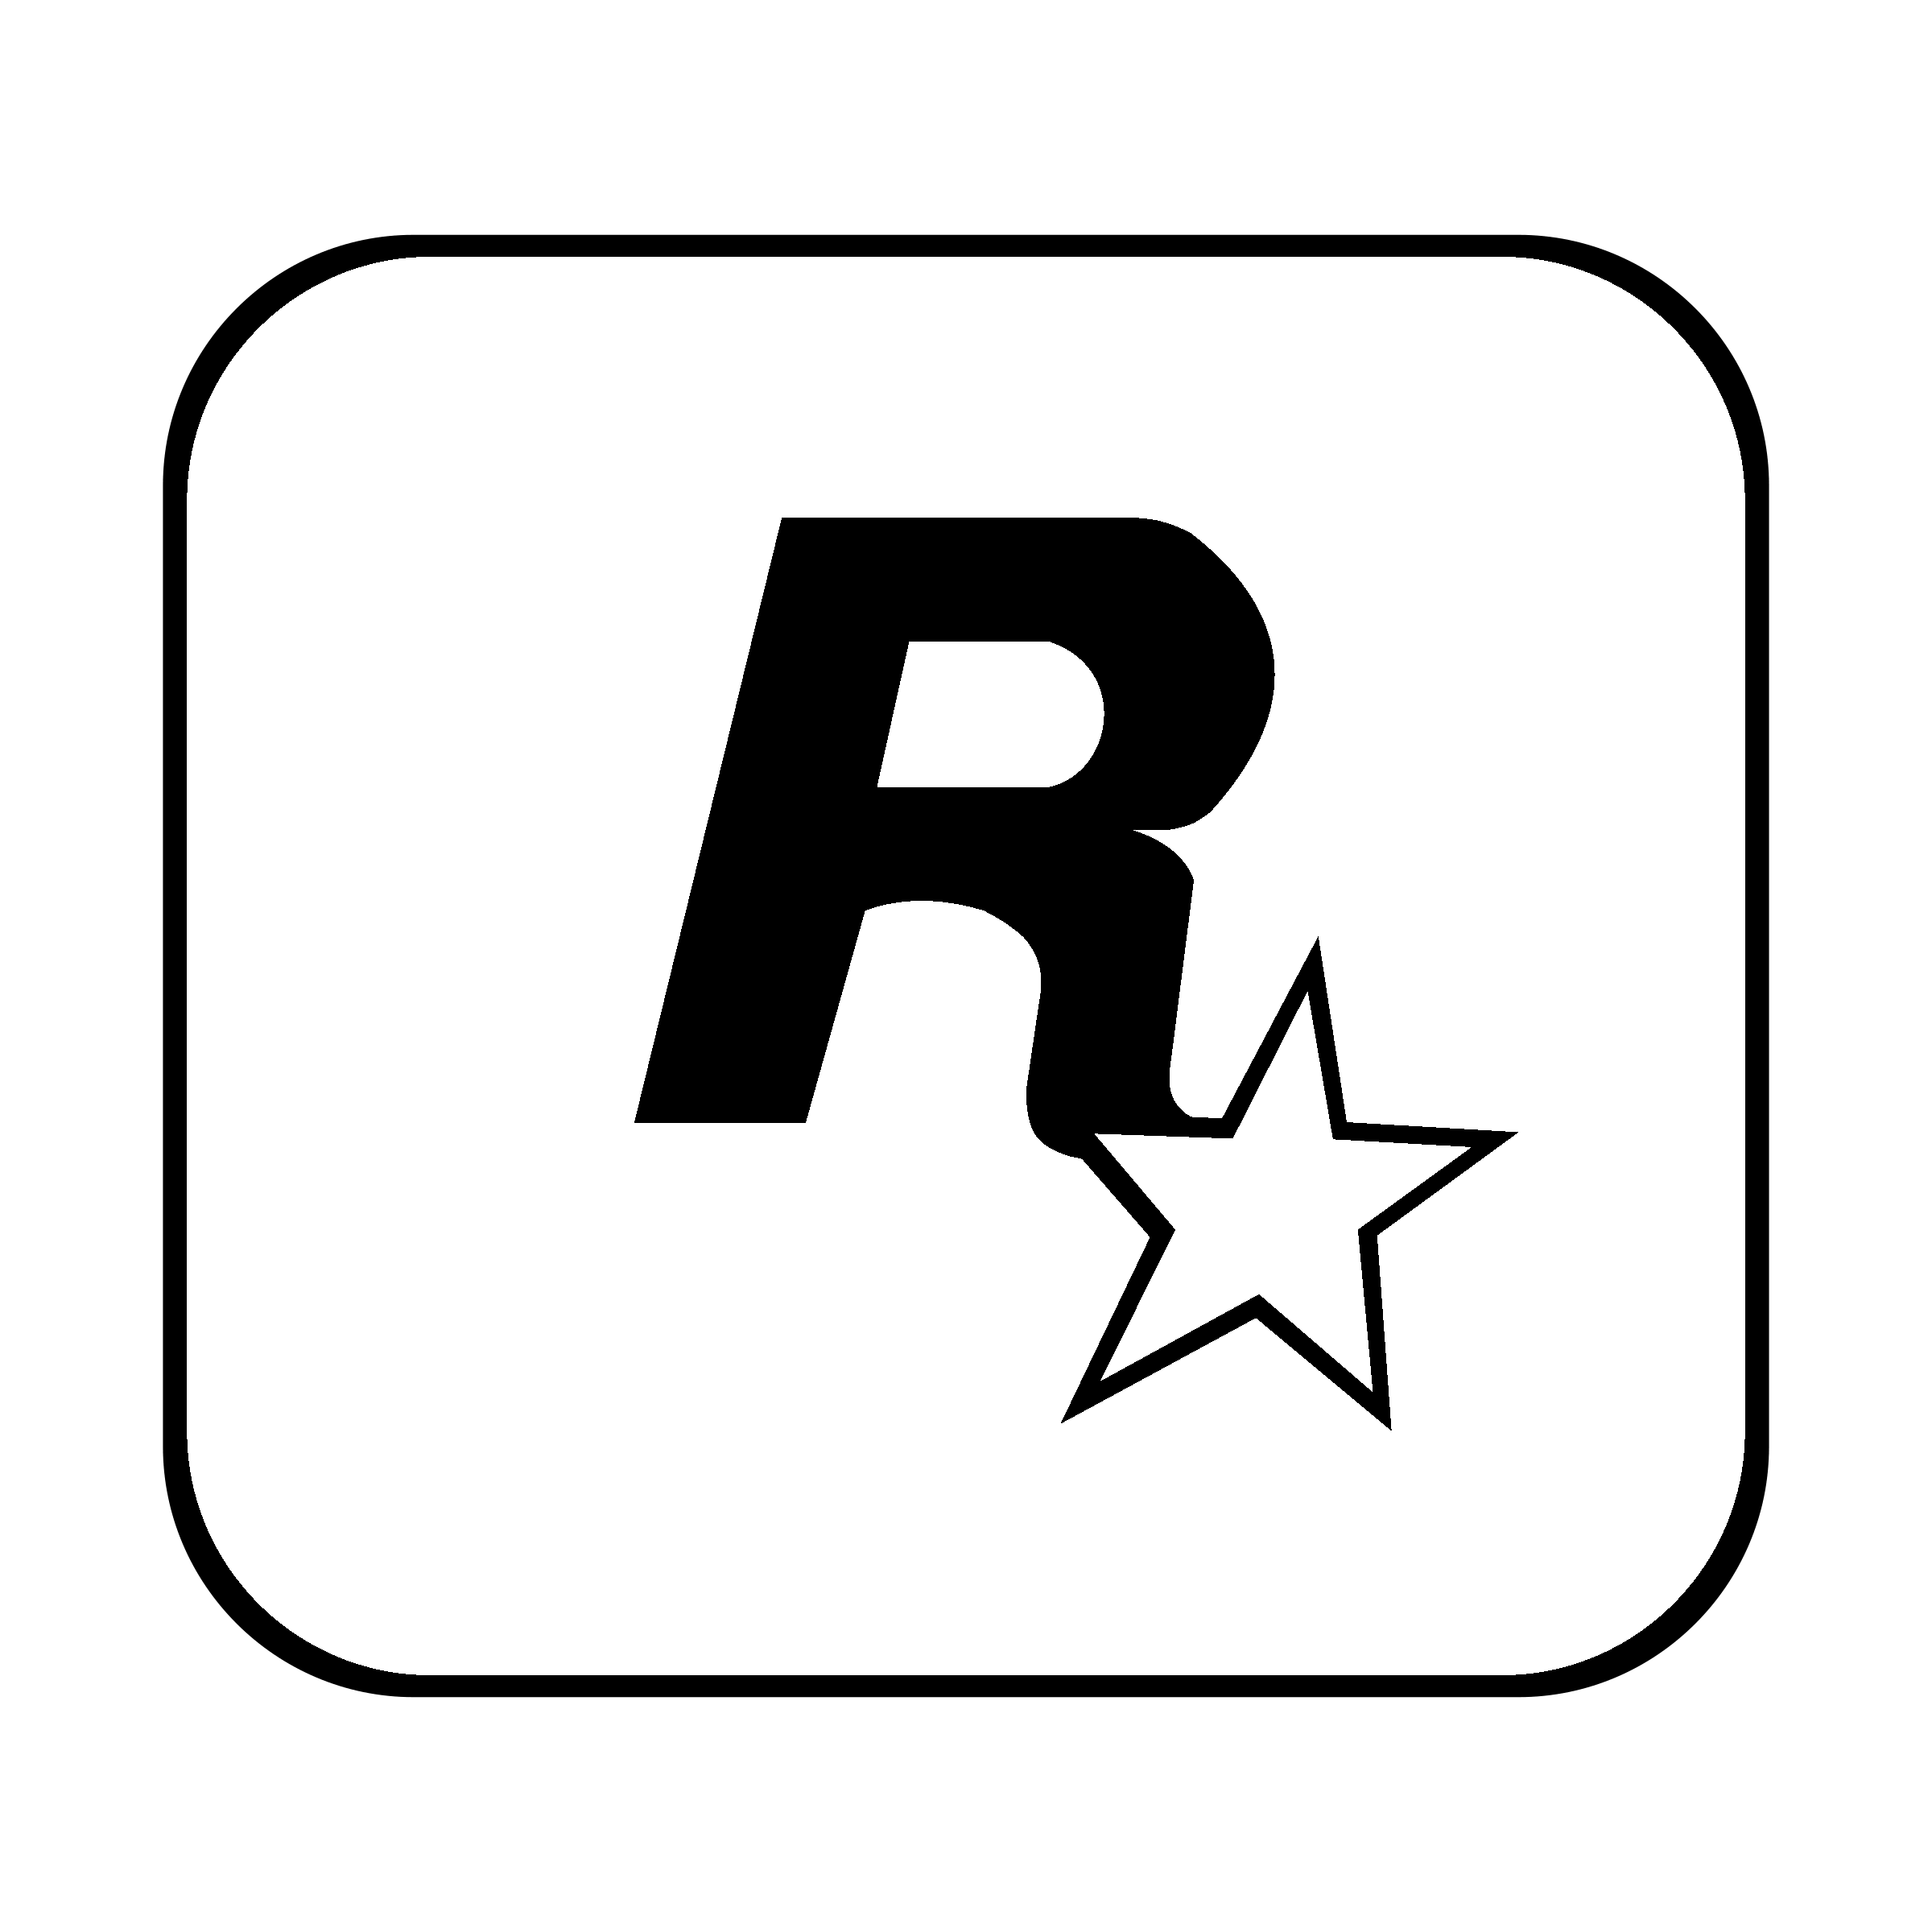 Rockstar Logo - Rockstar Logo PNG Transparent & SVG Vector - Freebie Supply